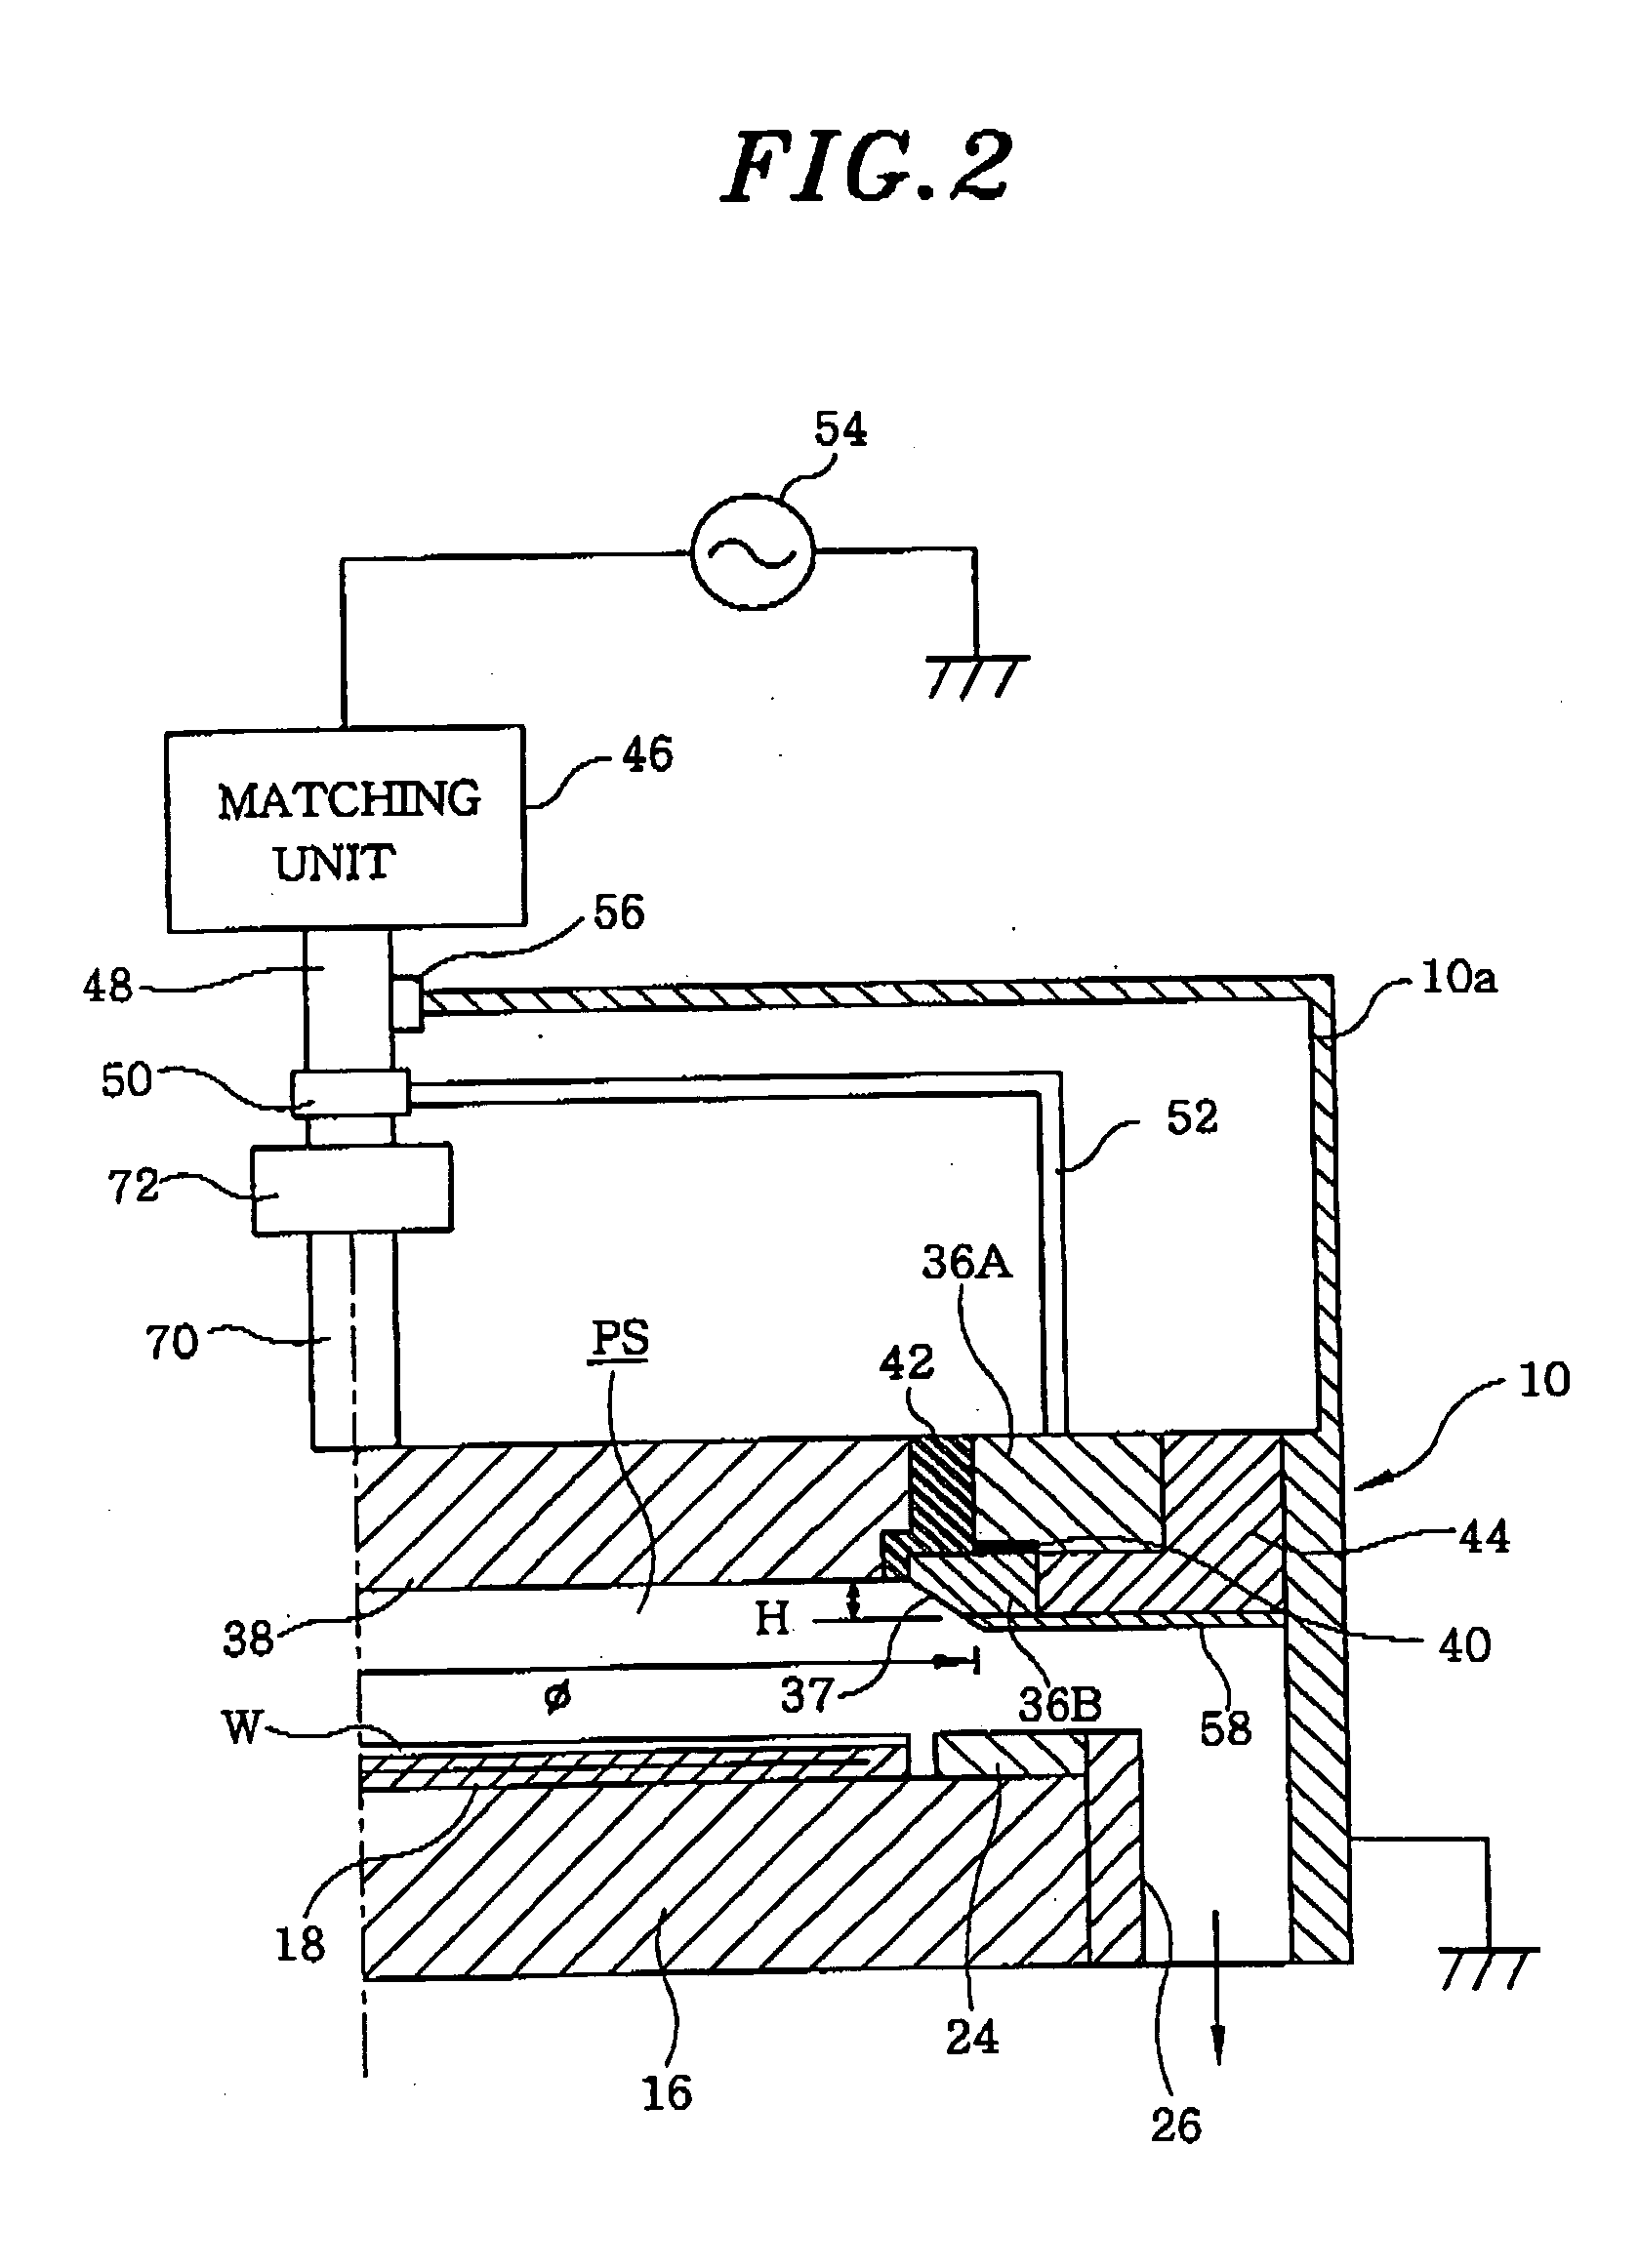 Plasma etching apparatus